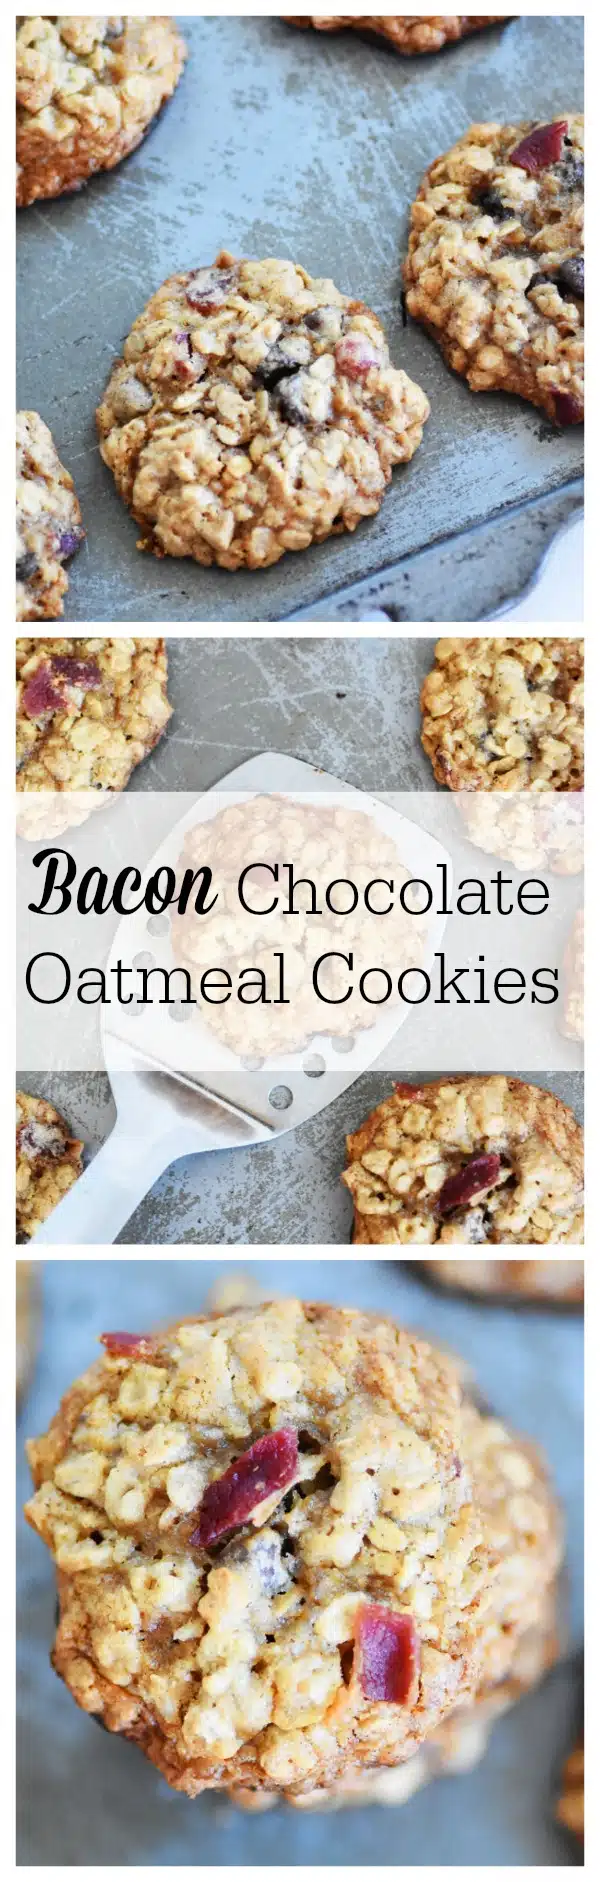 Bacon-chocolate-oatmeal-cookie-hero